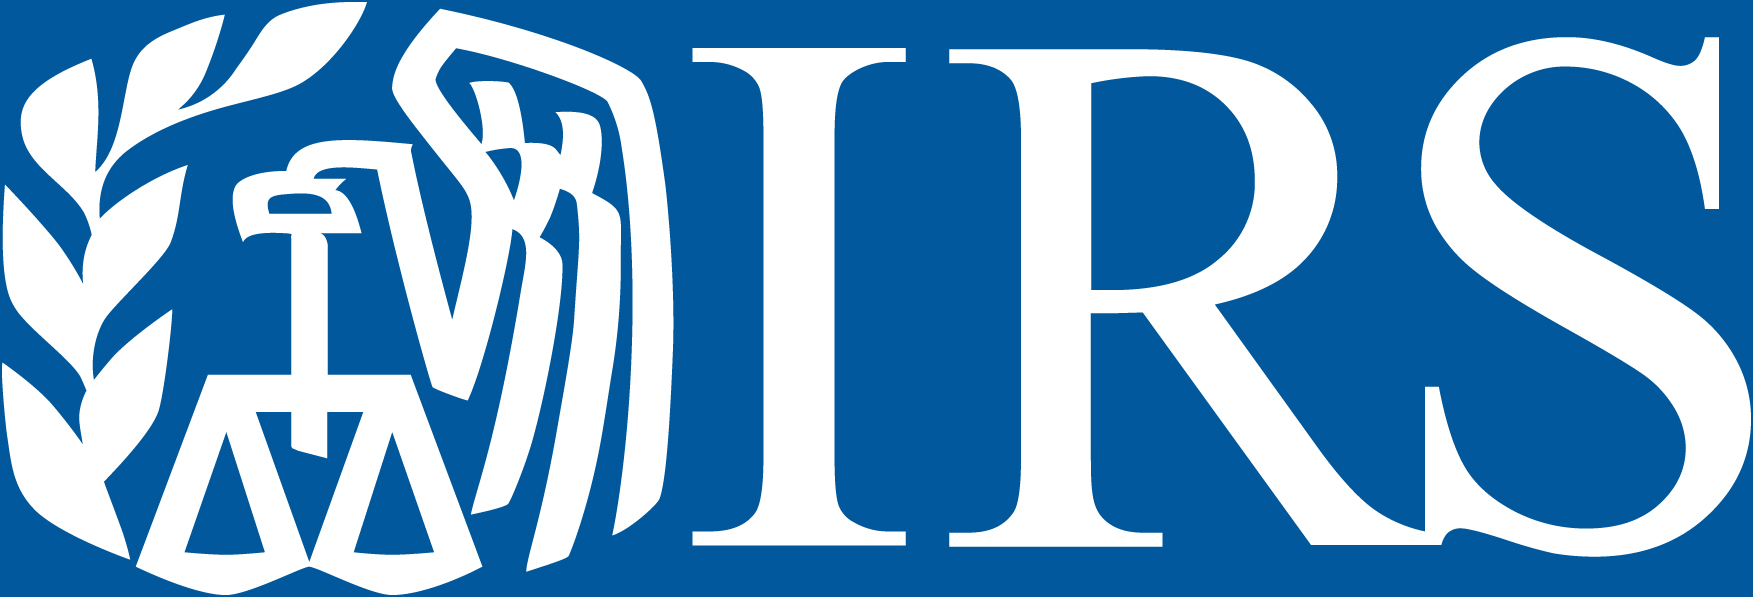 IRS-Logo copy